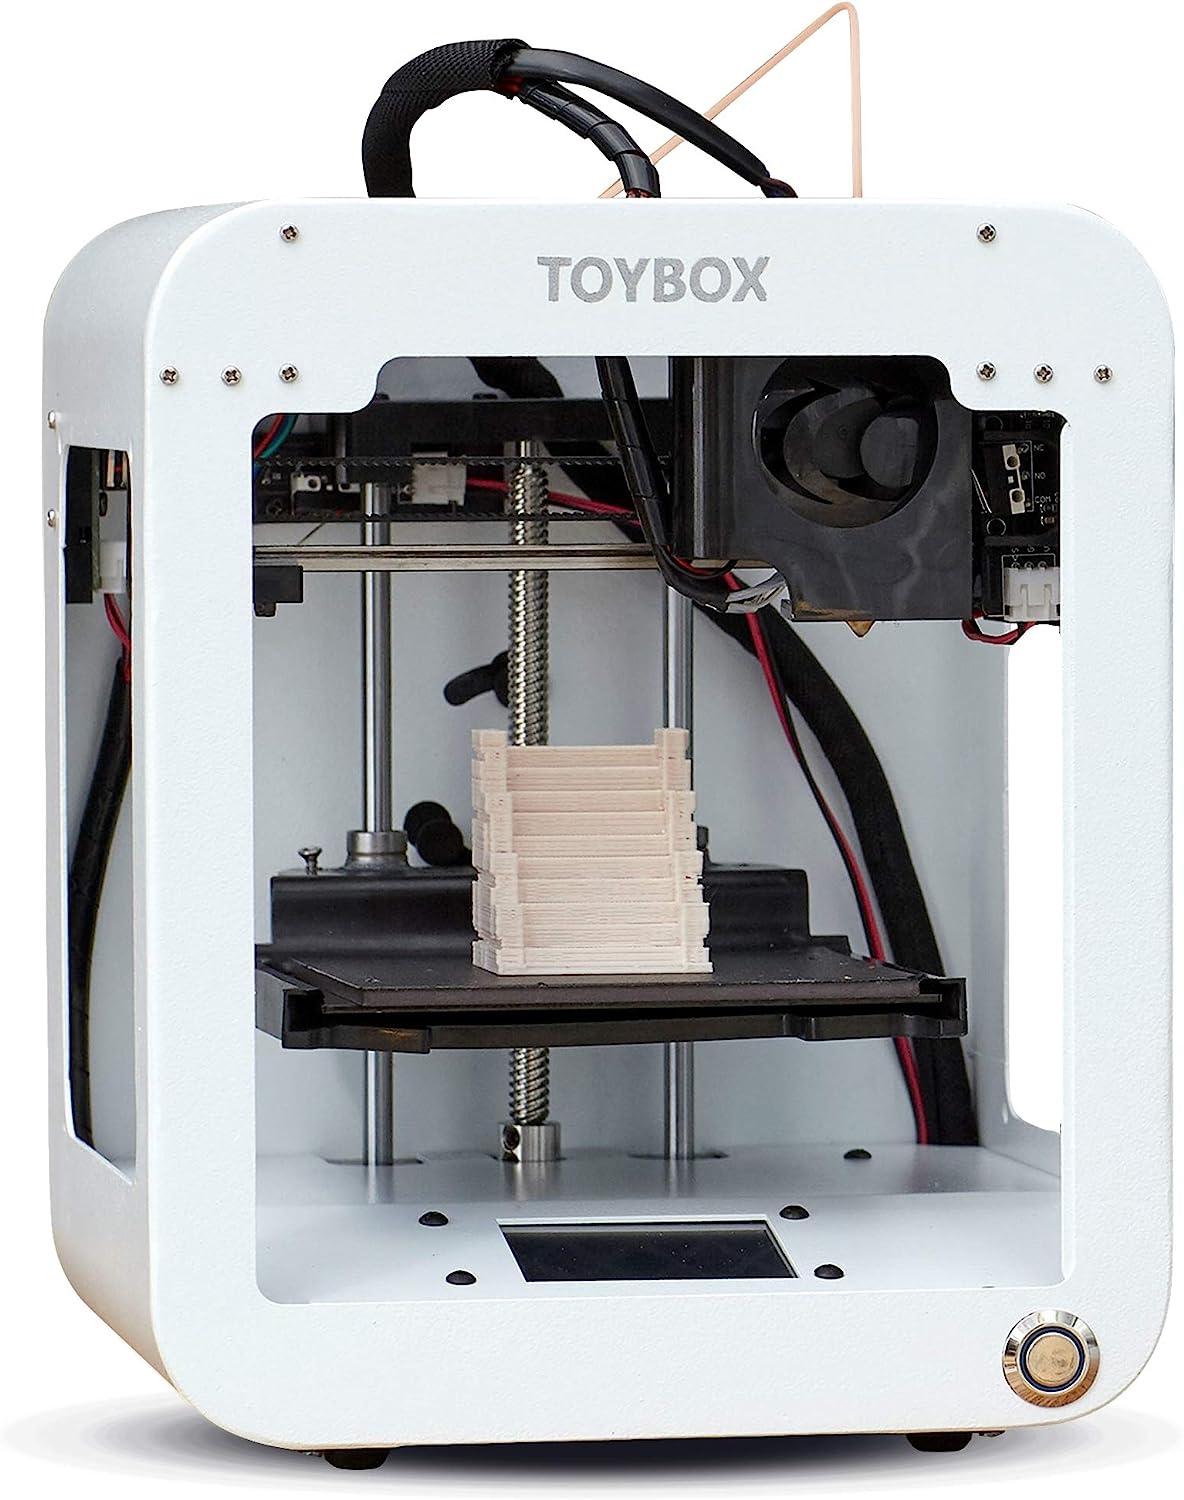 Toybox 3D 1-Touch Kid-Friendly Childrens Toy Printer [...]